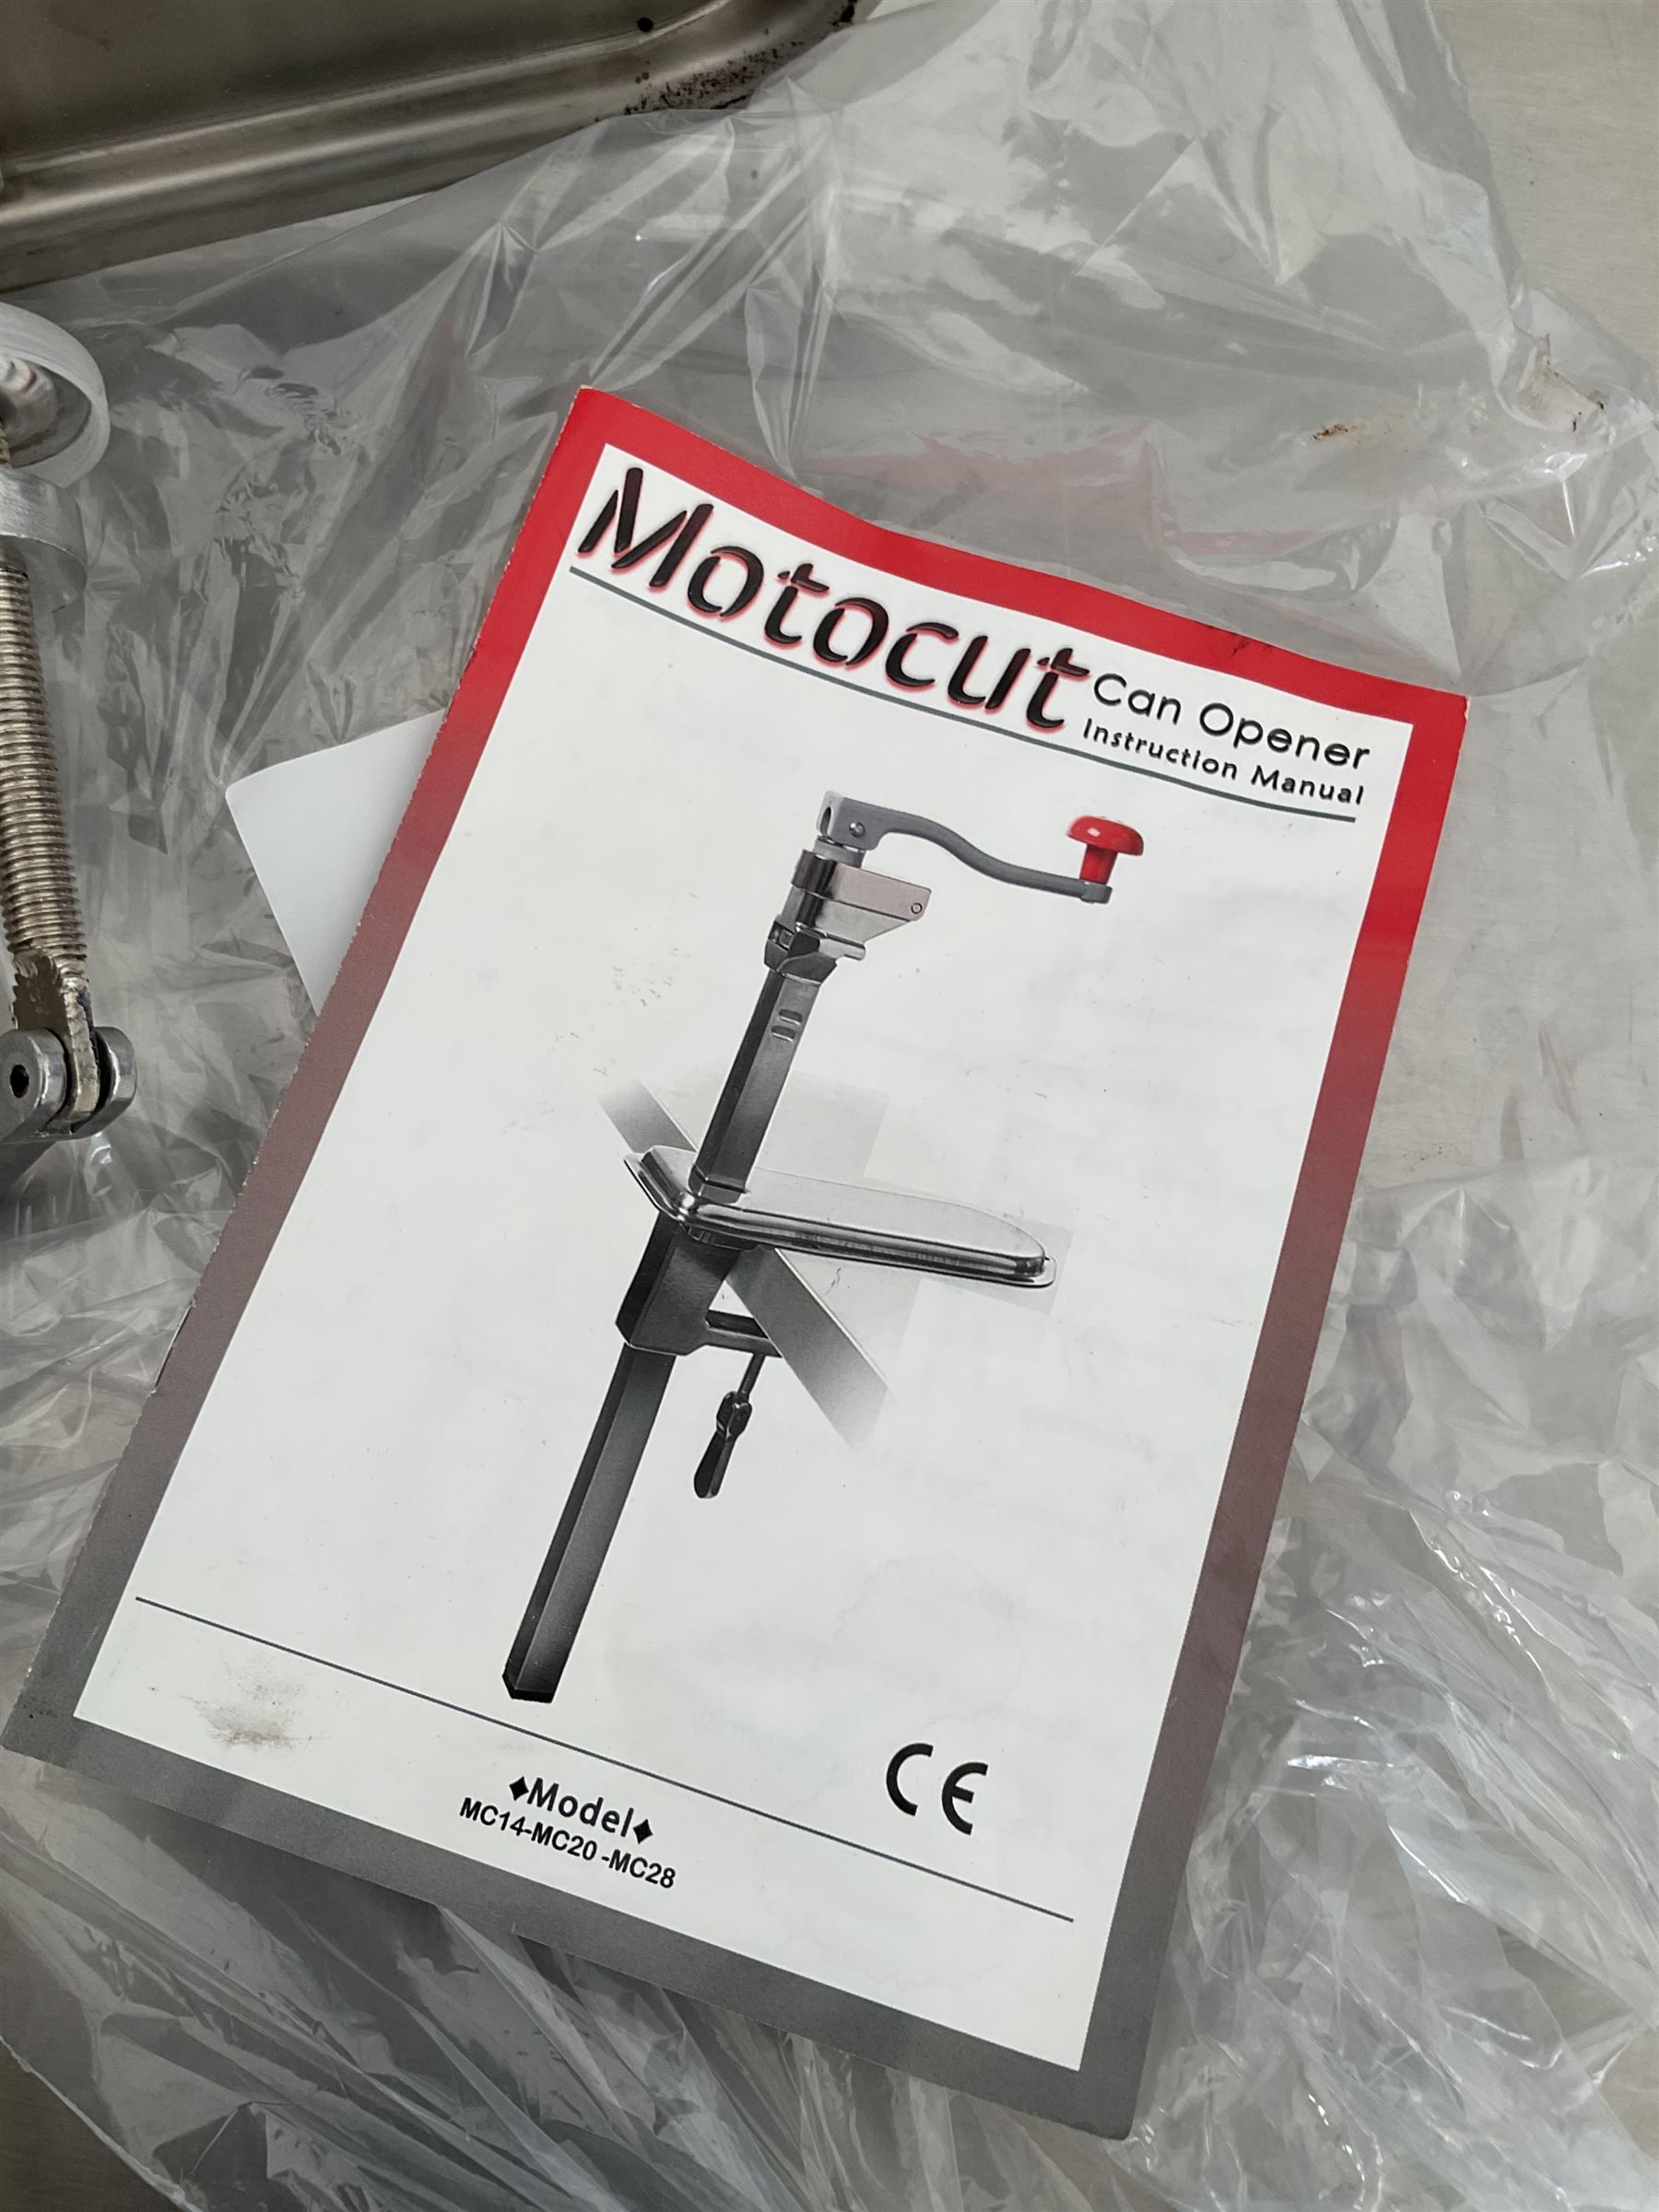 Motocut worktop mounted can opener - Image 2 of 3